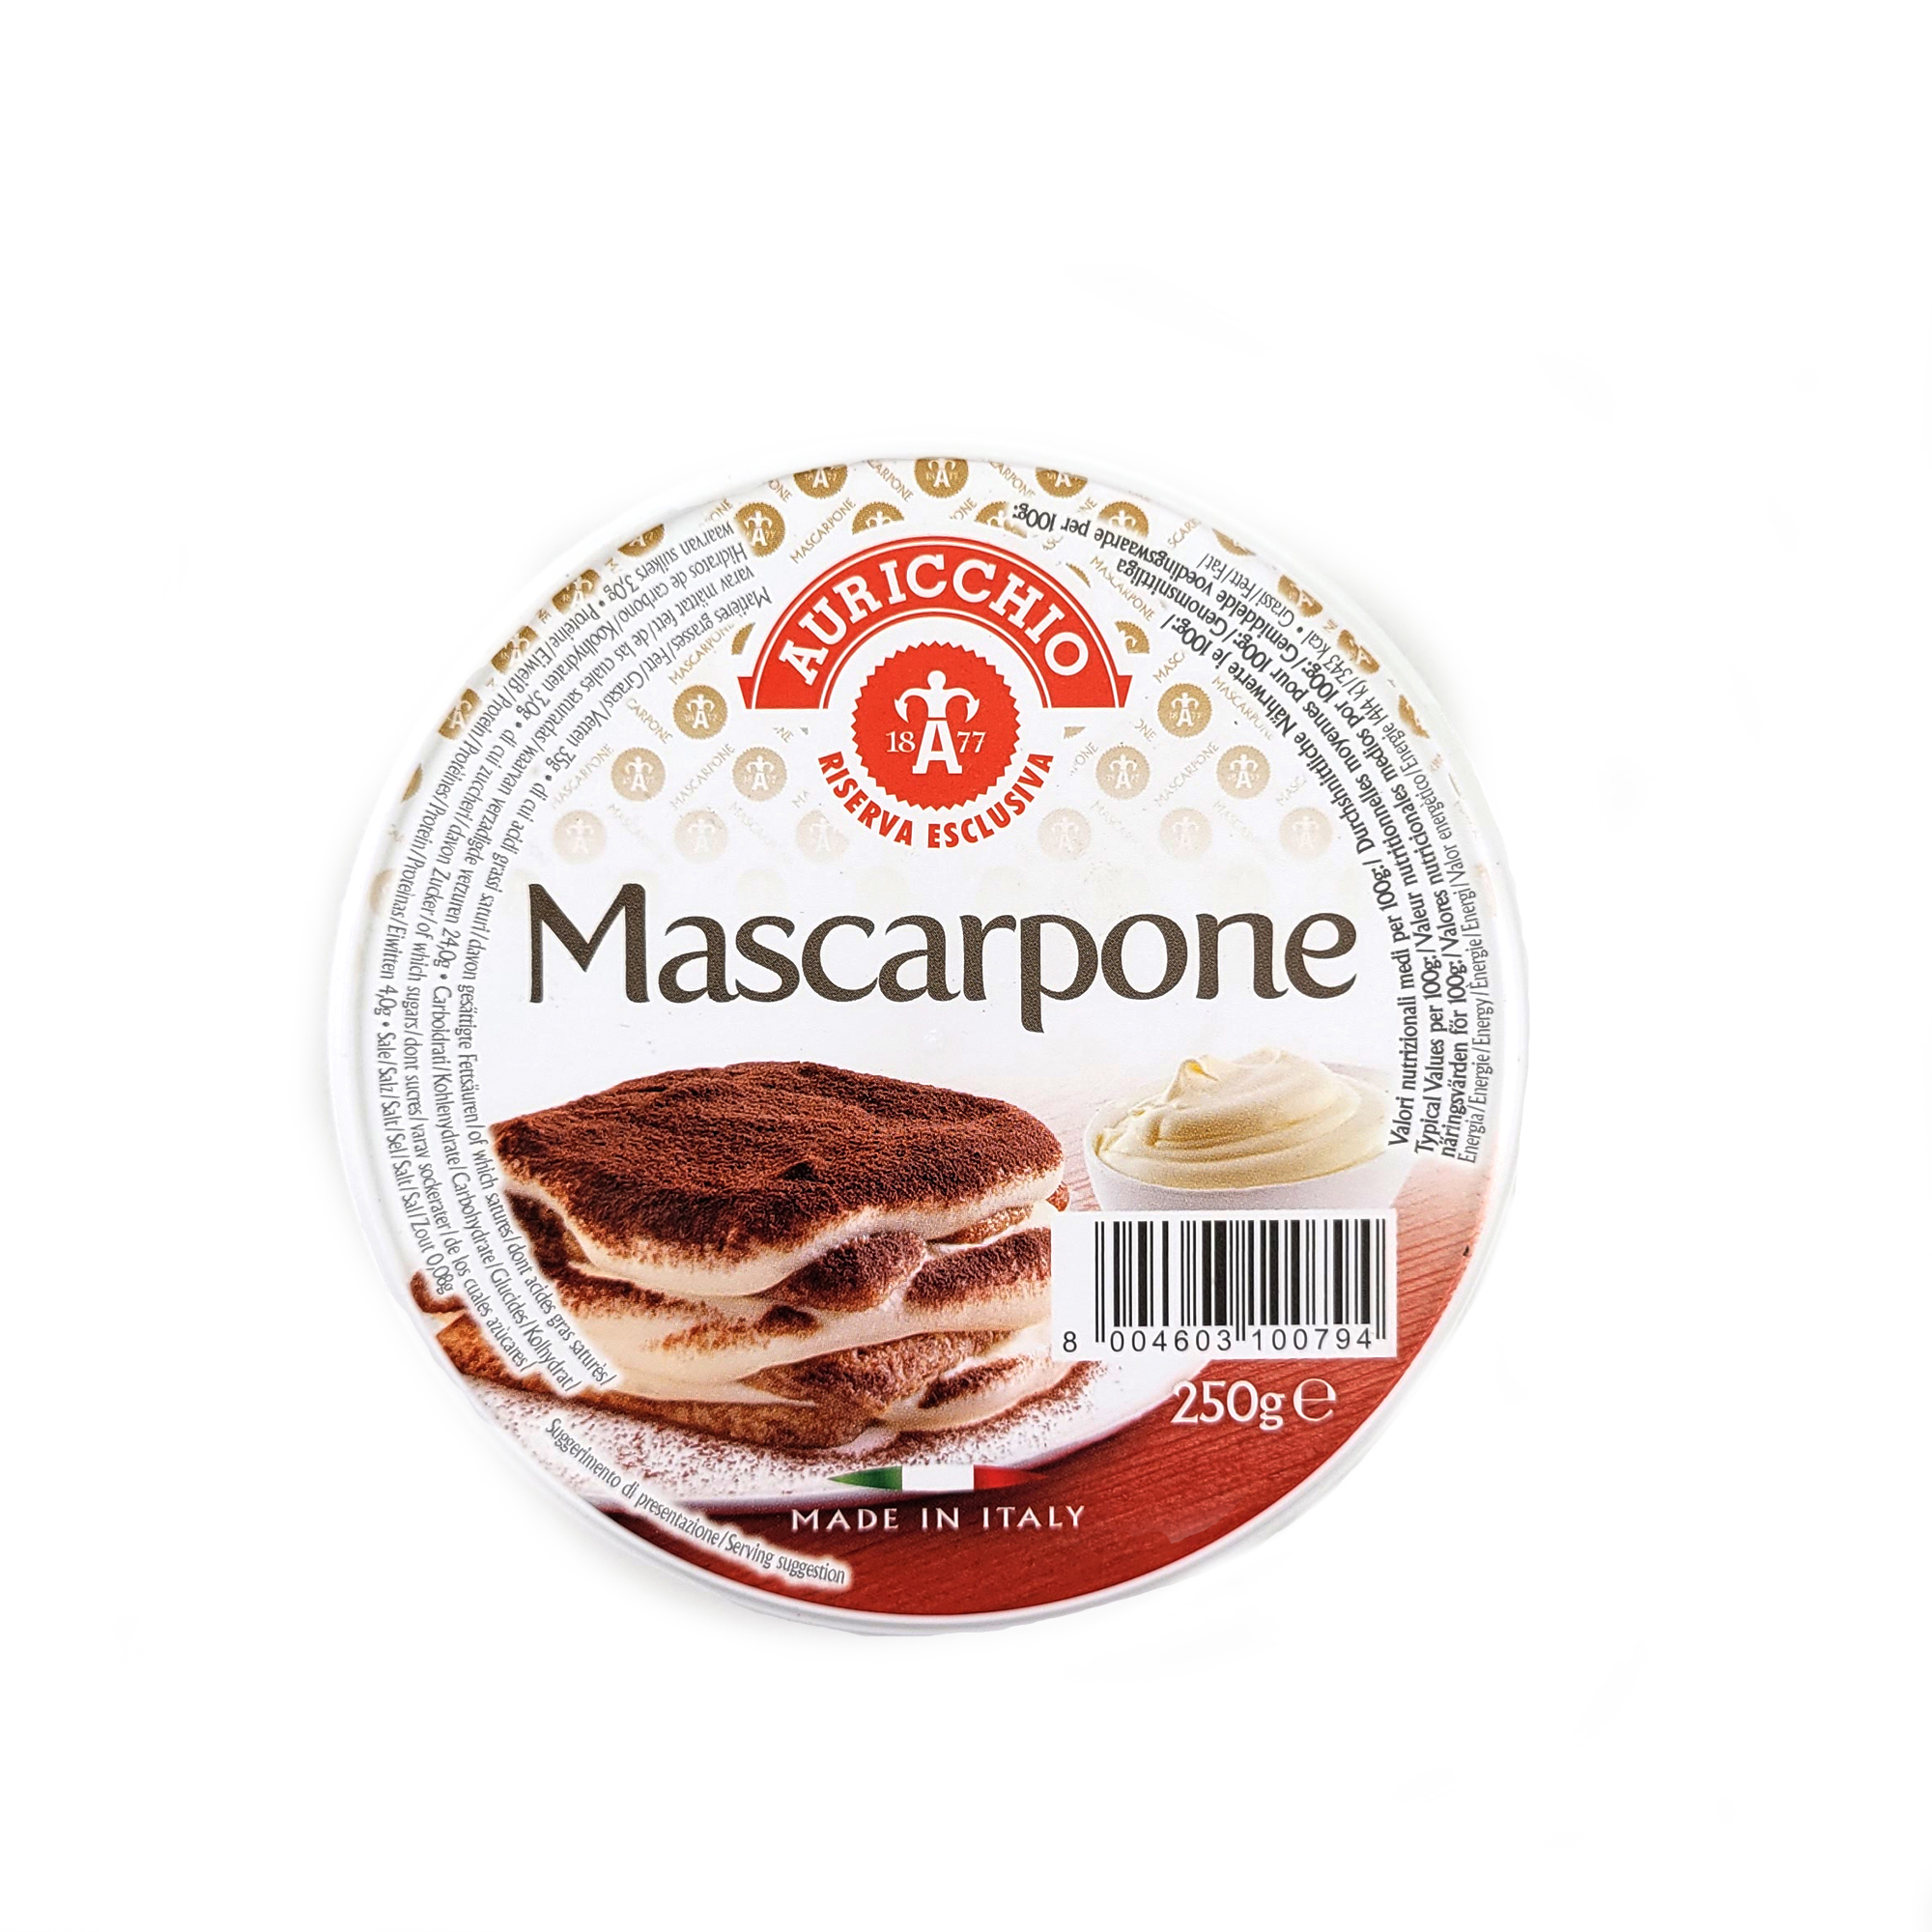 Auricchio Mascarpone Cheese 250g- Italy*